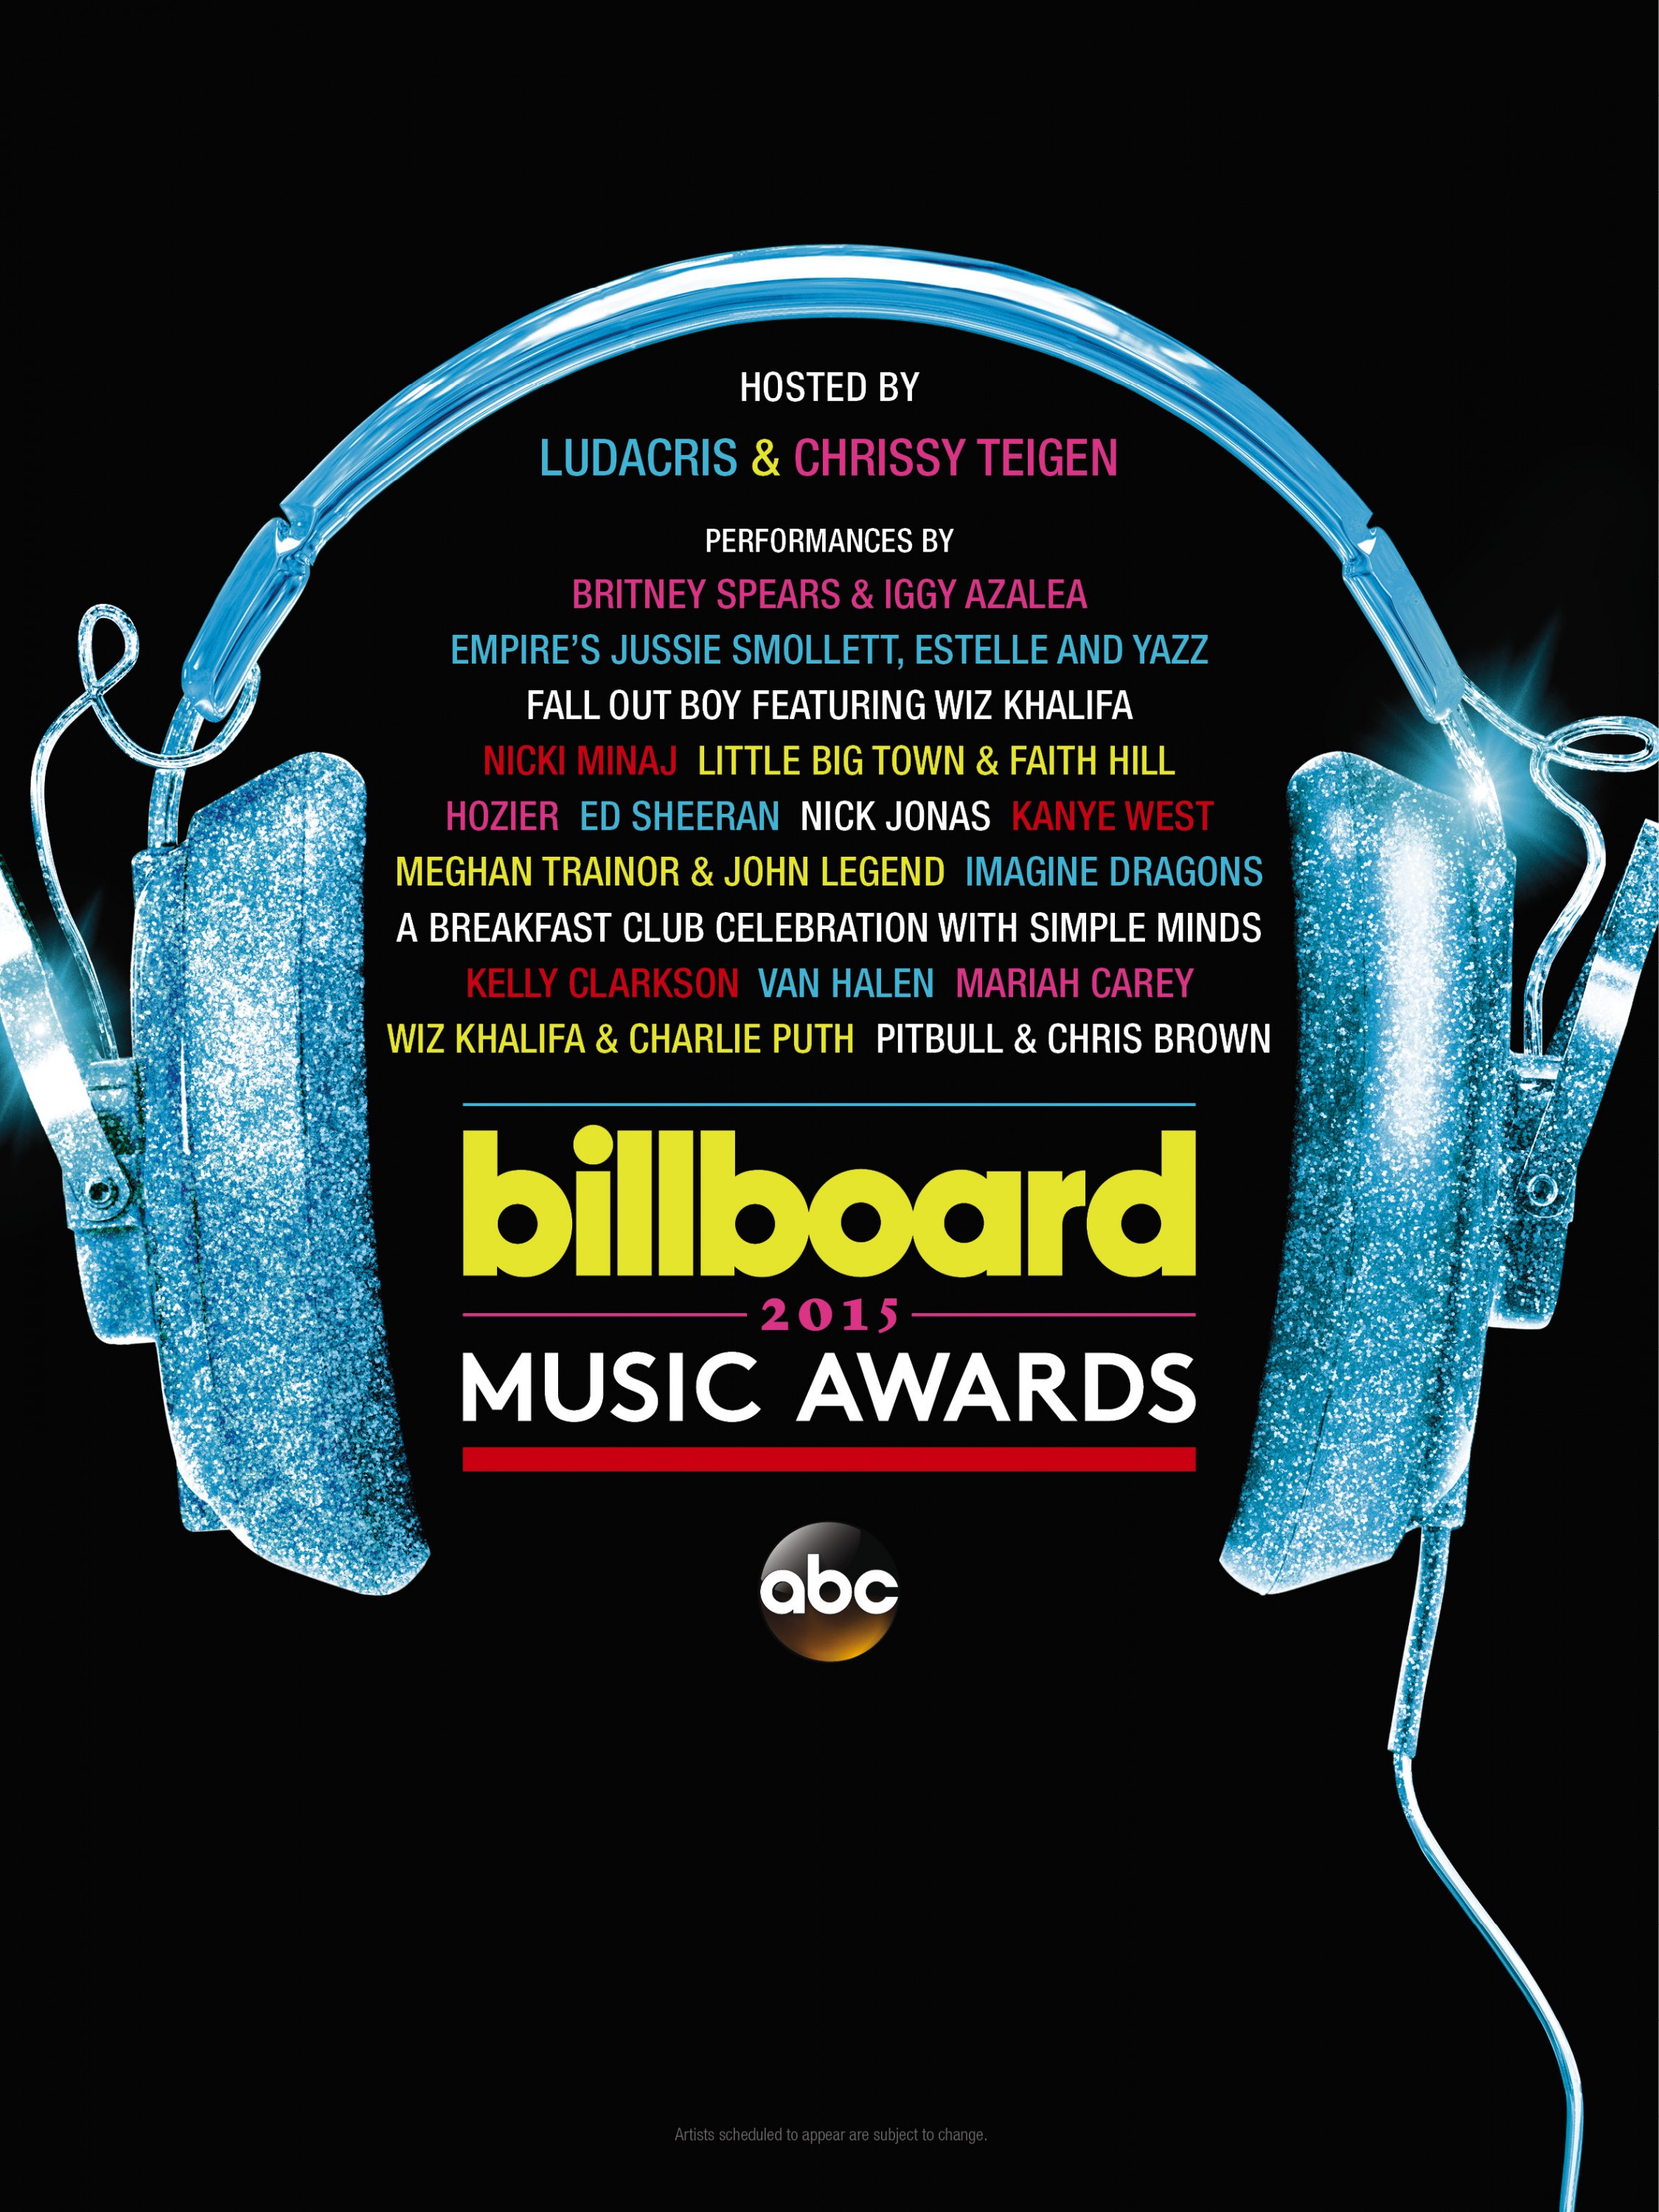 Mega Sized TV Poster Image for 2015 Billboard Music Awards (#2 of 7)